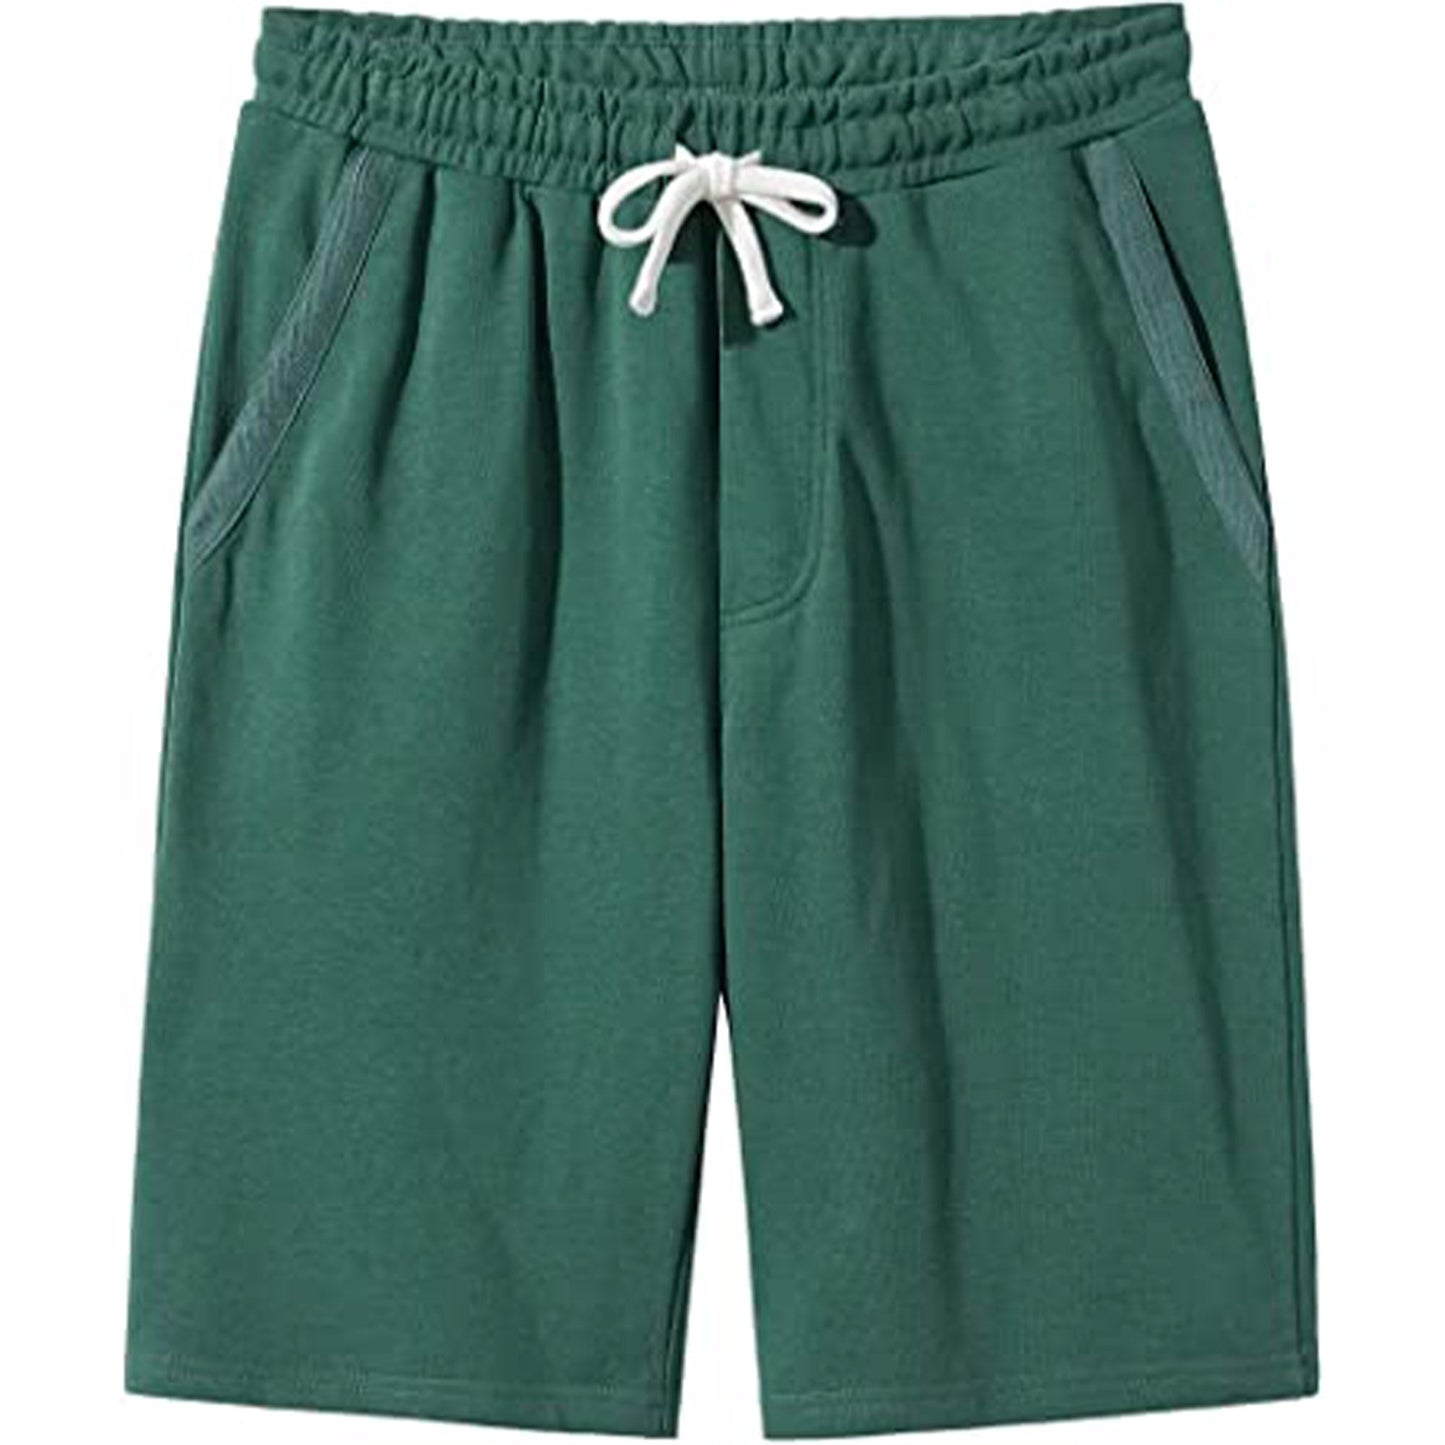 Azlax Green Mens Shorts